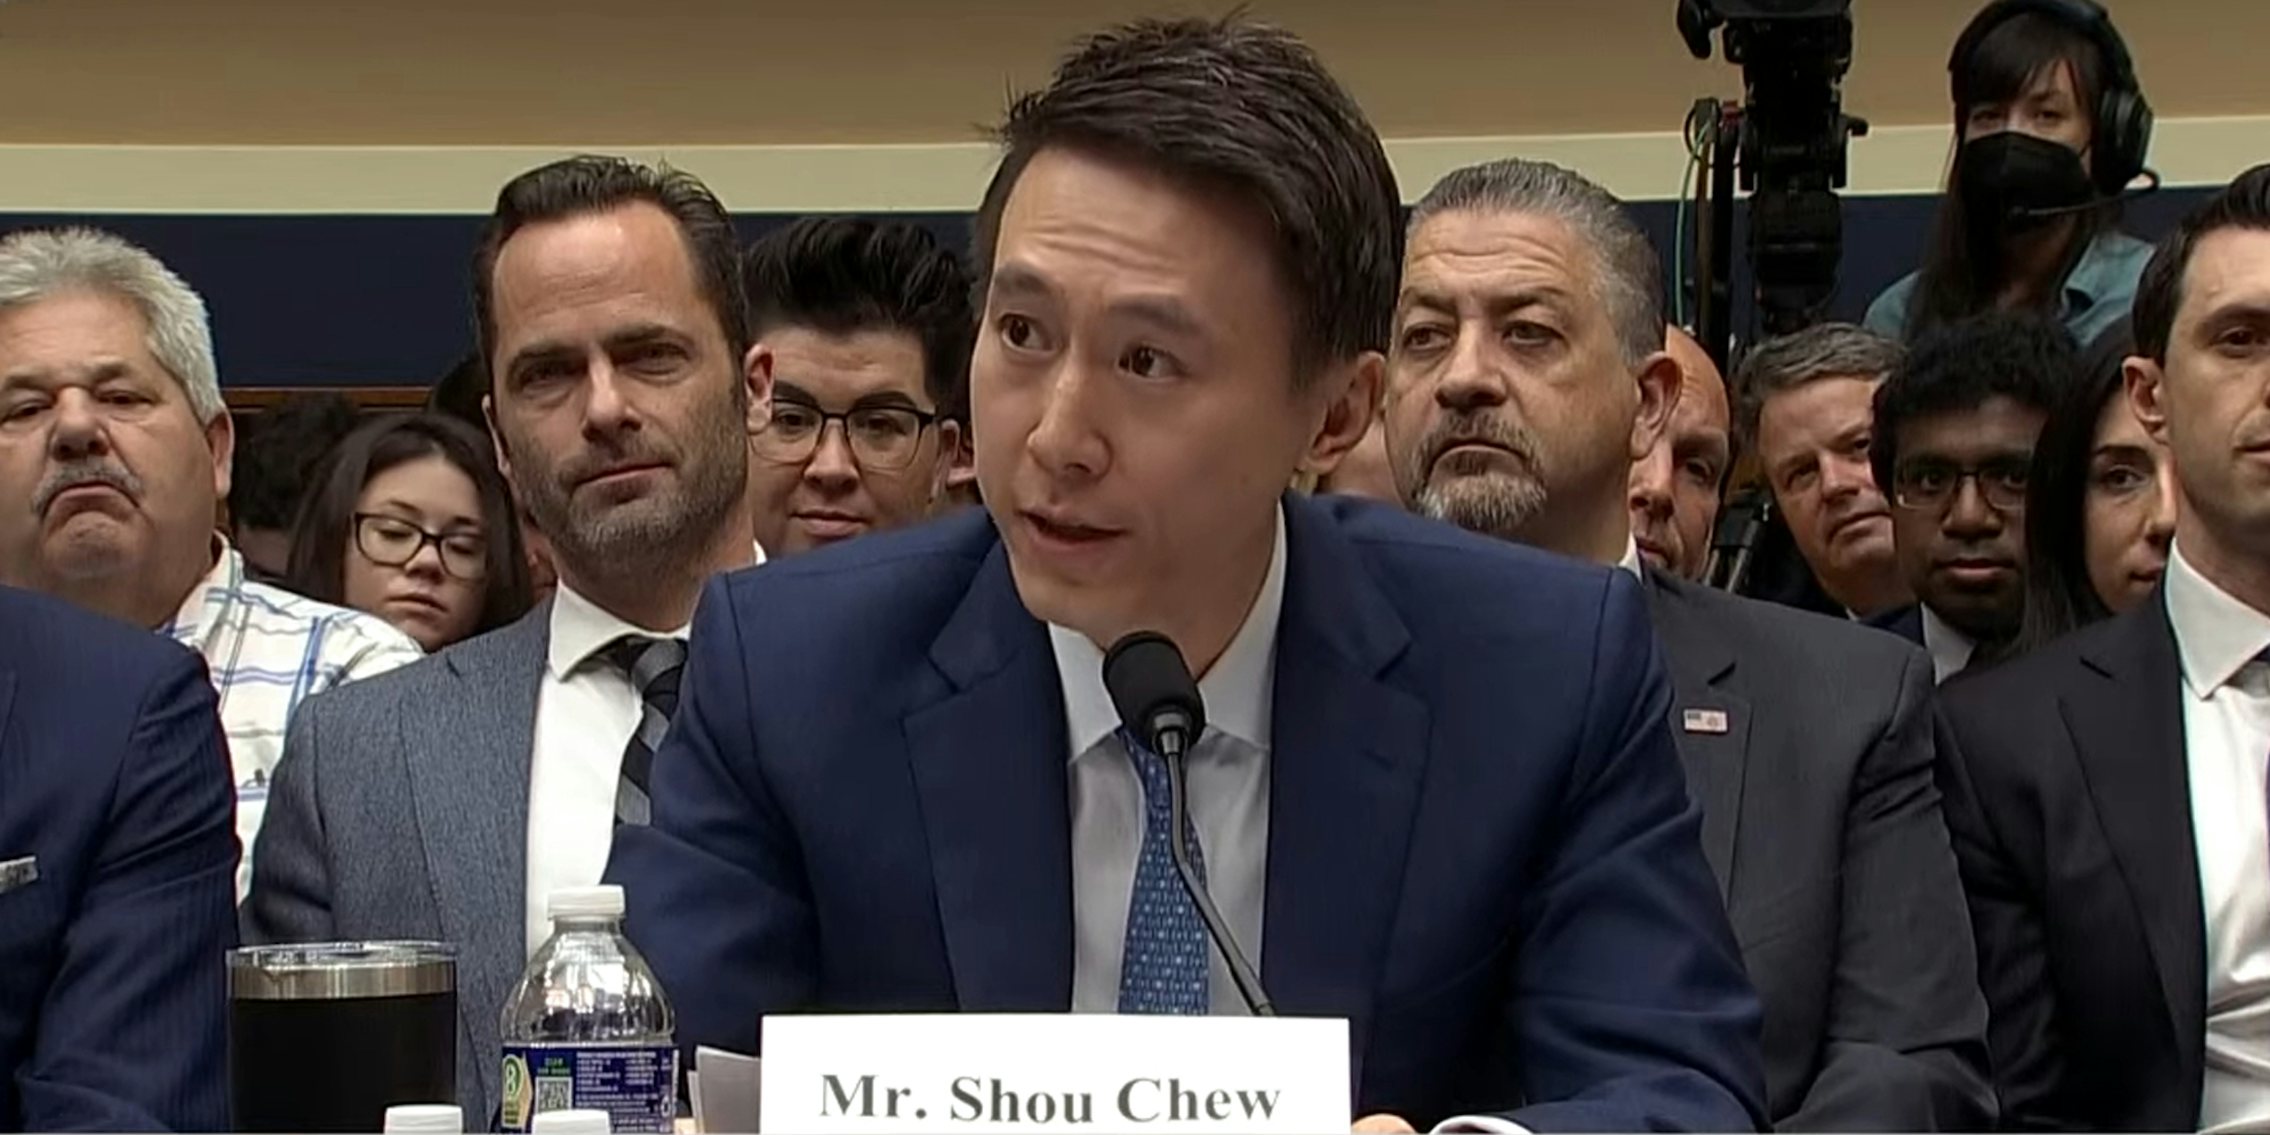 Mr. Shou Chew speaking into microphone